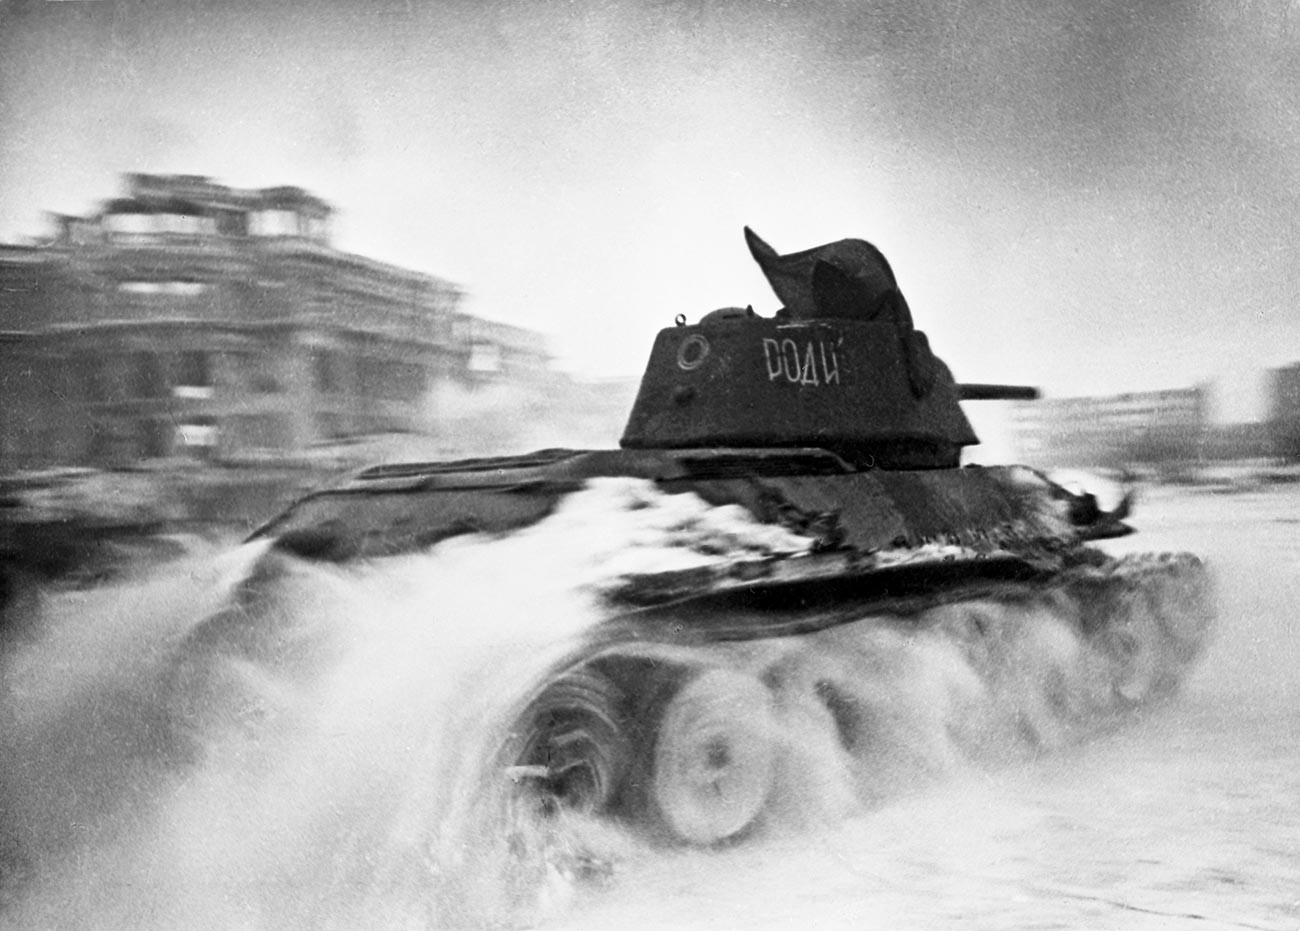 Soviet tanks in Stalingrad.